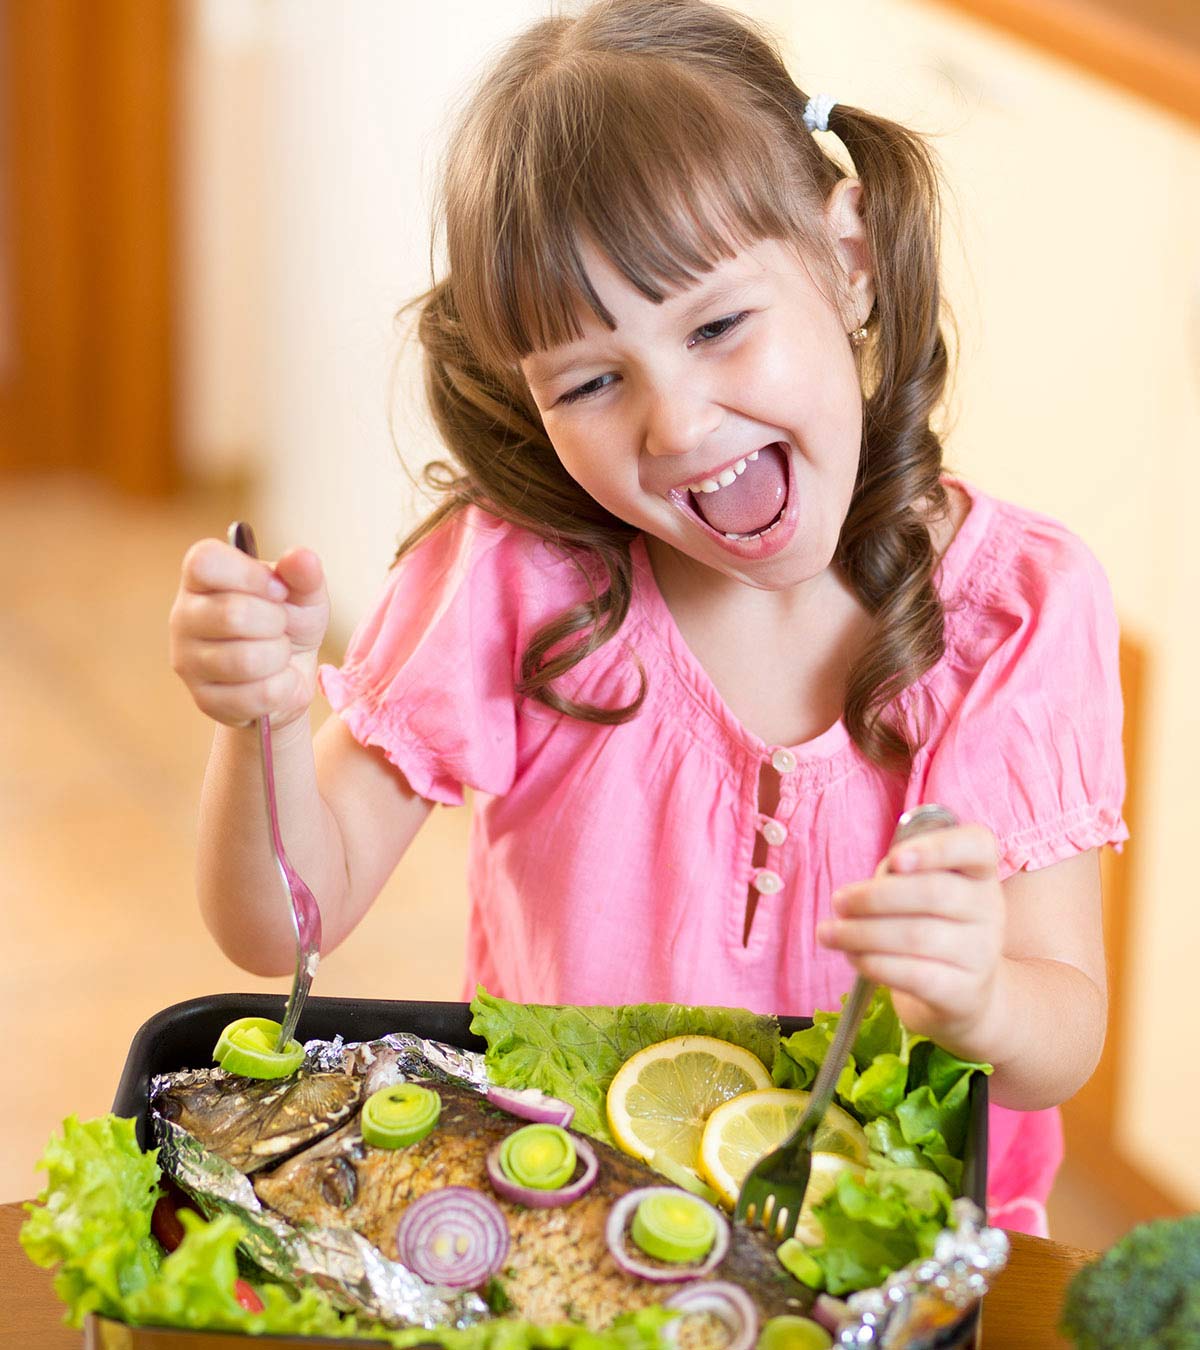 11 Health Benefits Of Omega-3 For Kids